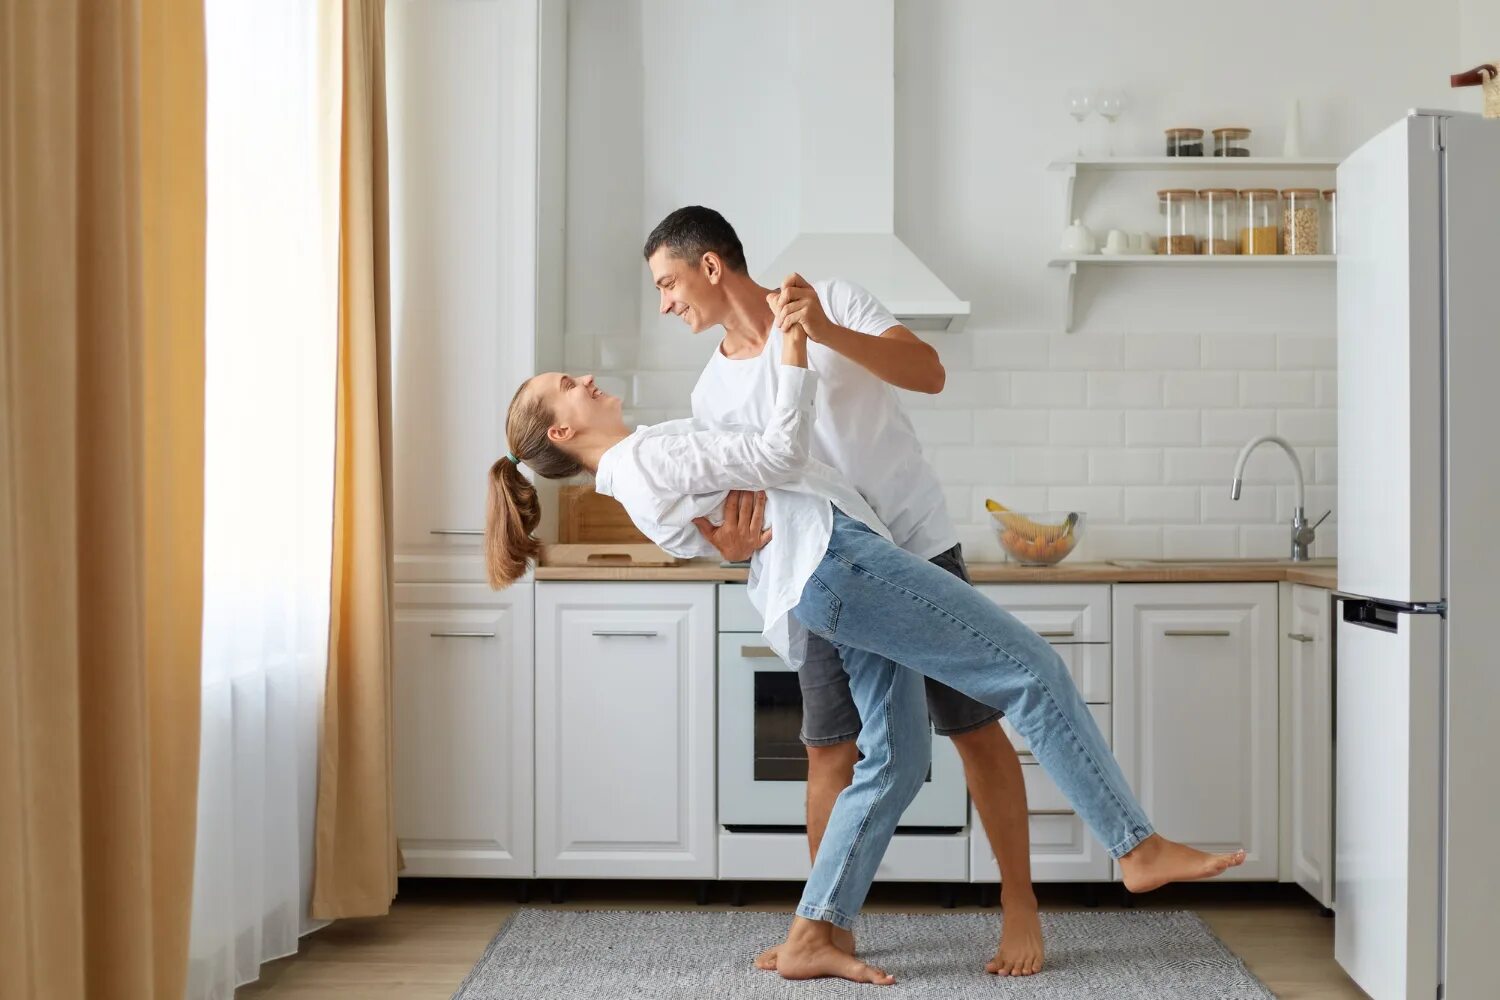 Дает мужу на кухне. Пара танцует на кухне. Муж жена танцуют на кухне. Танец на кухне муж жена и. Счастливая пара на кухне.